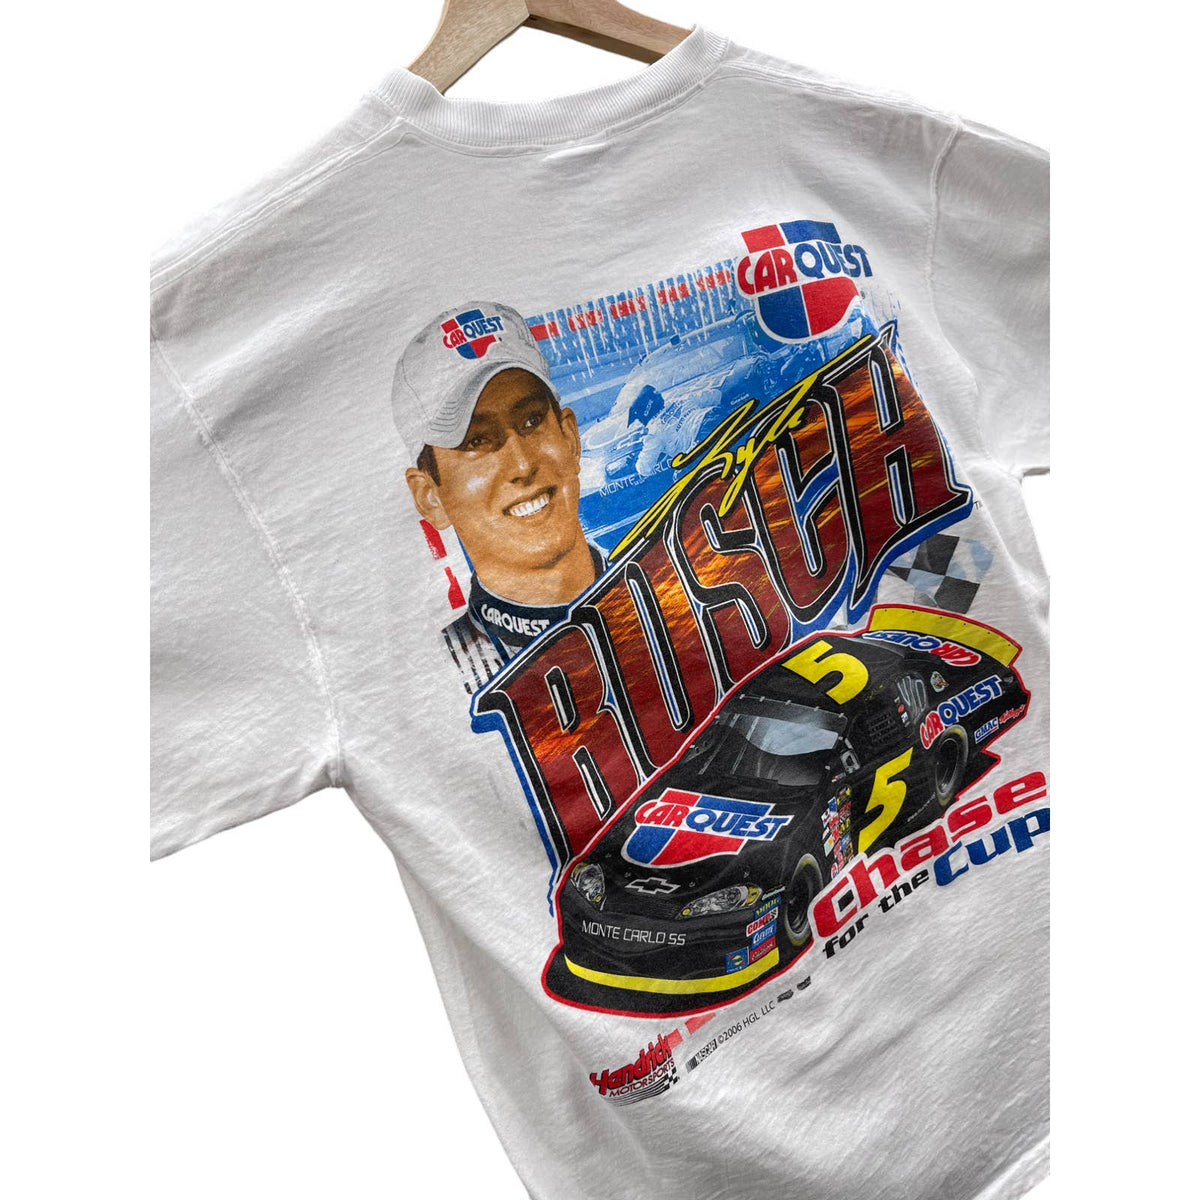 Vintage 2000's Kyle Busch Nascar Racing Graphic T-Shirt